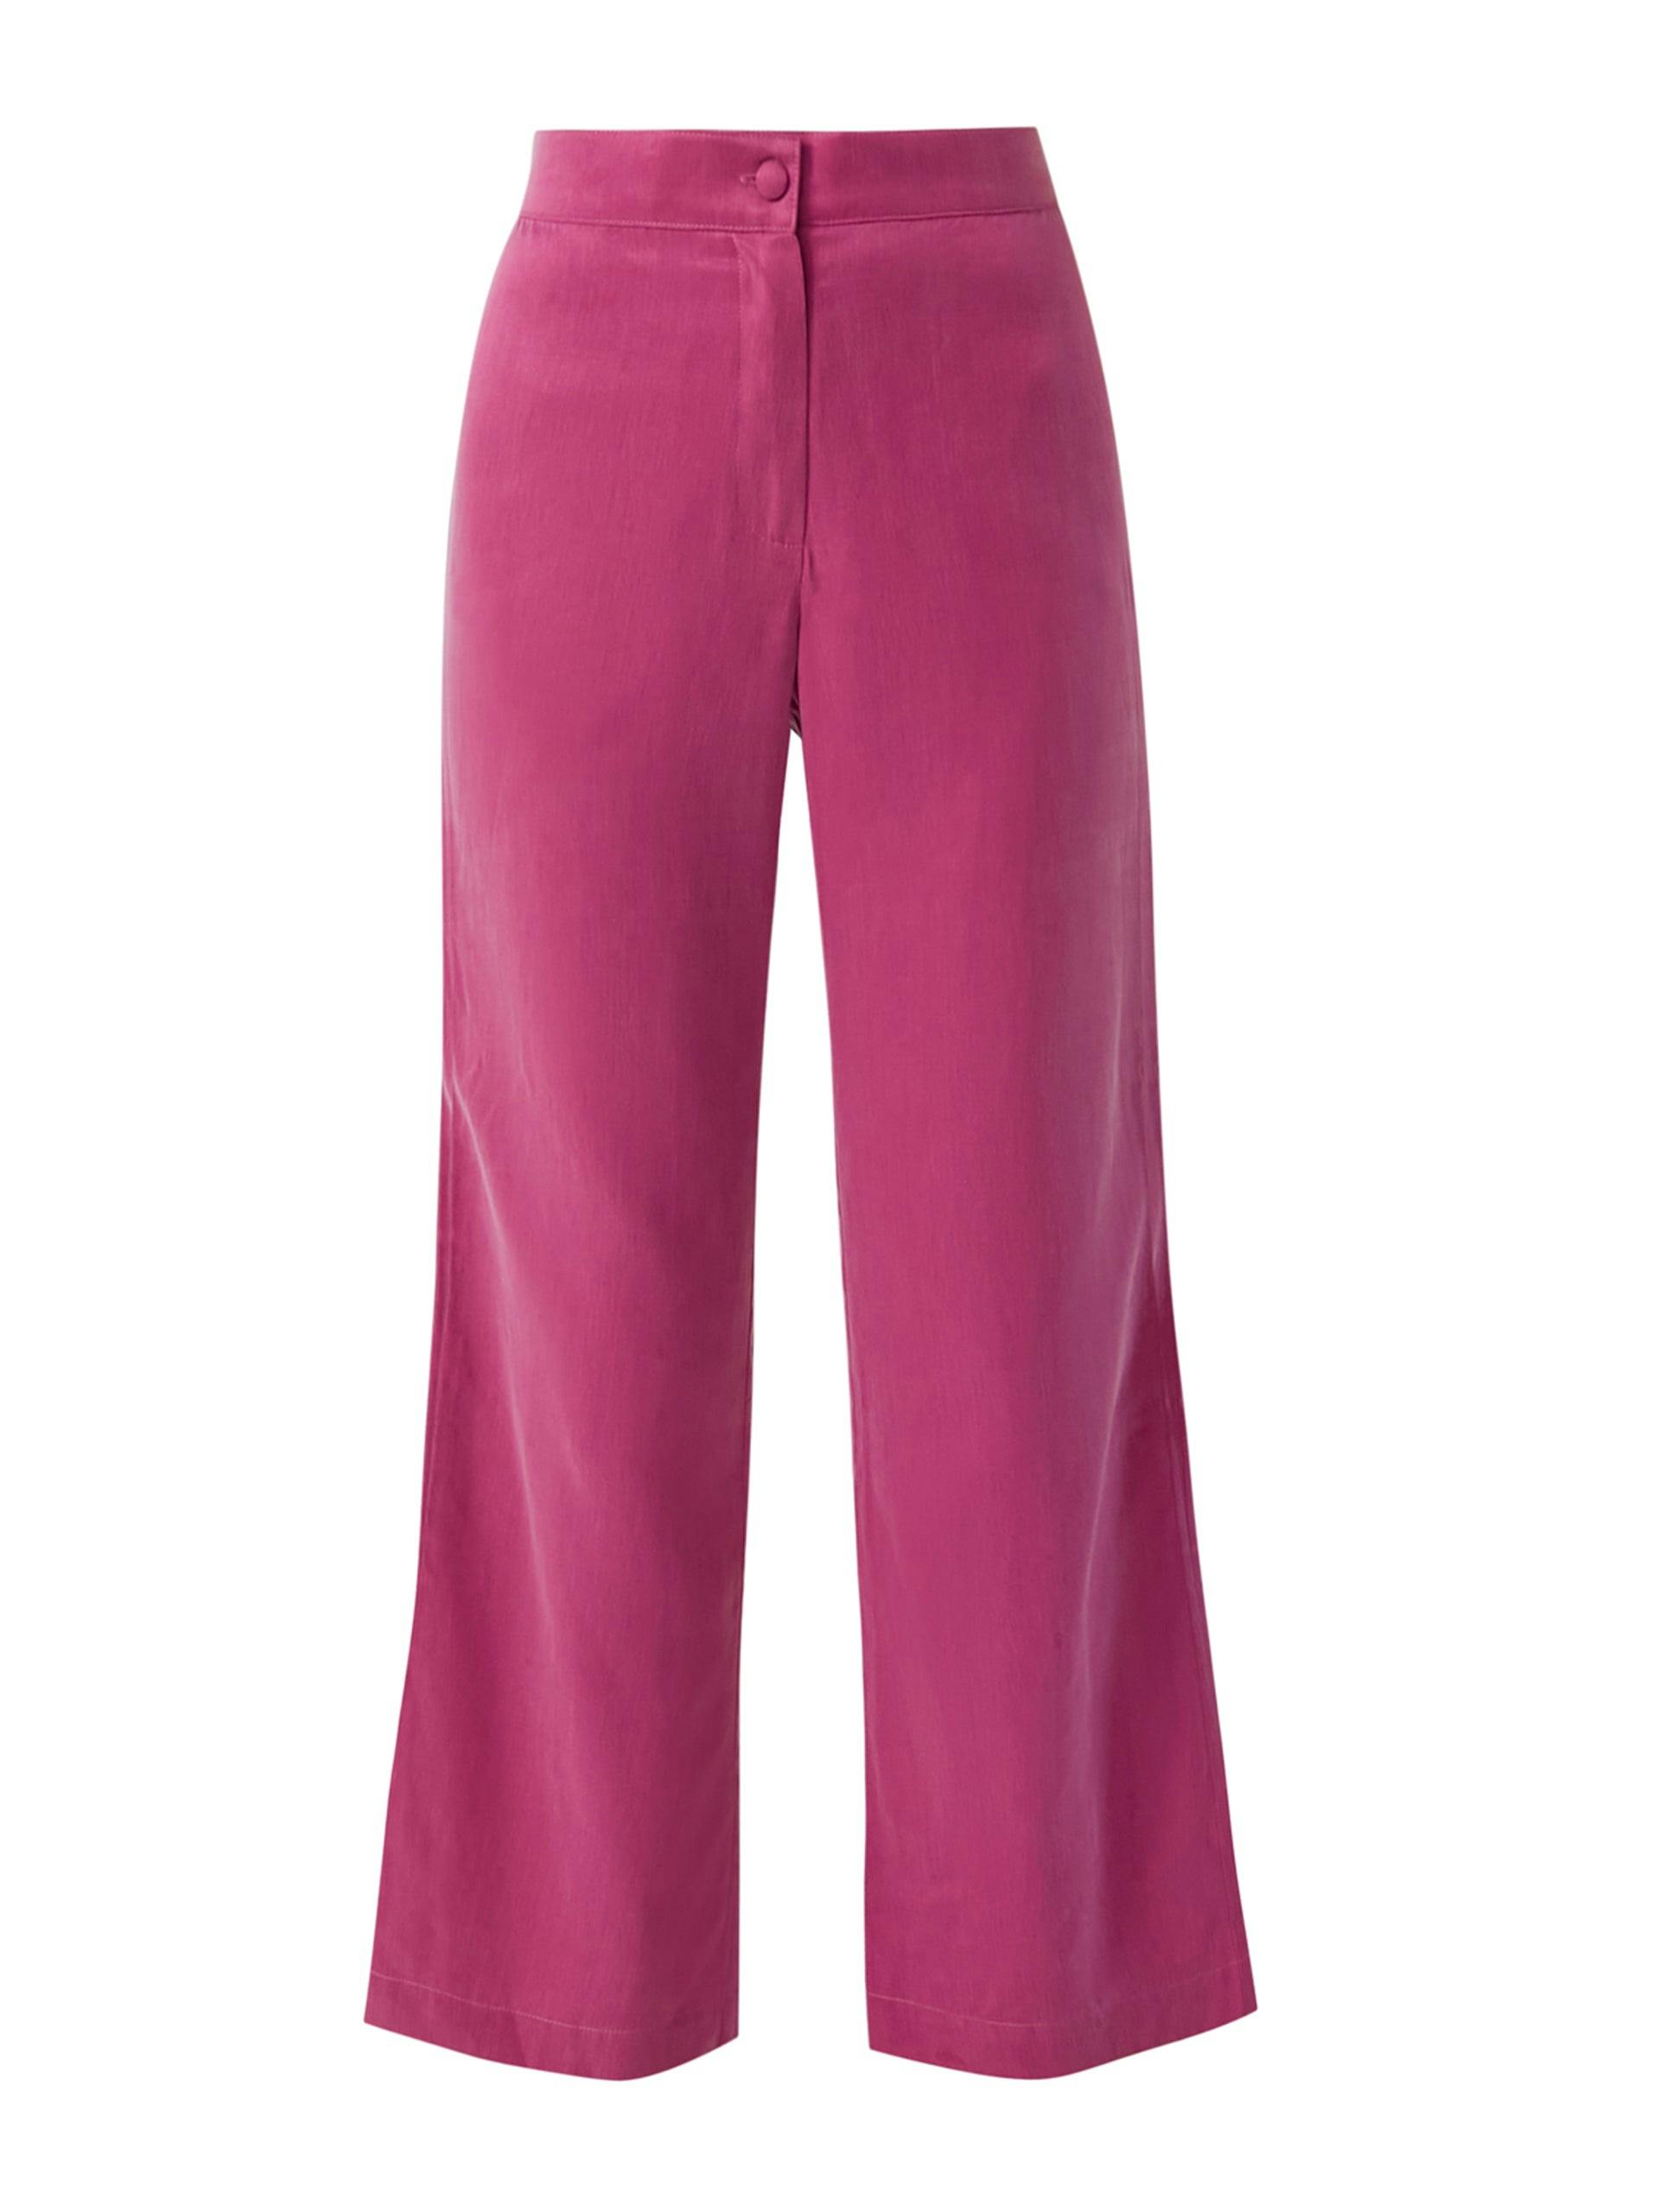 Dalia pink silky trousers